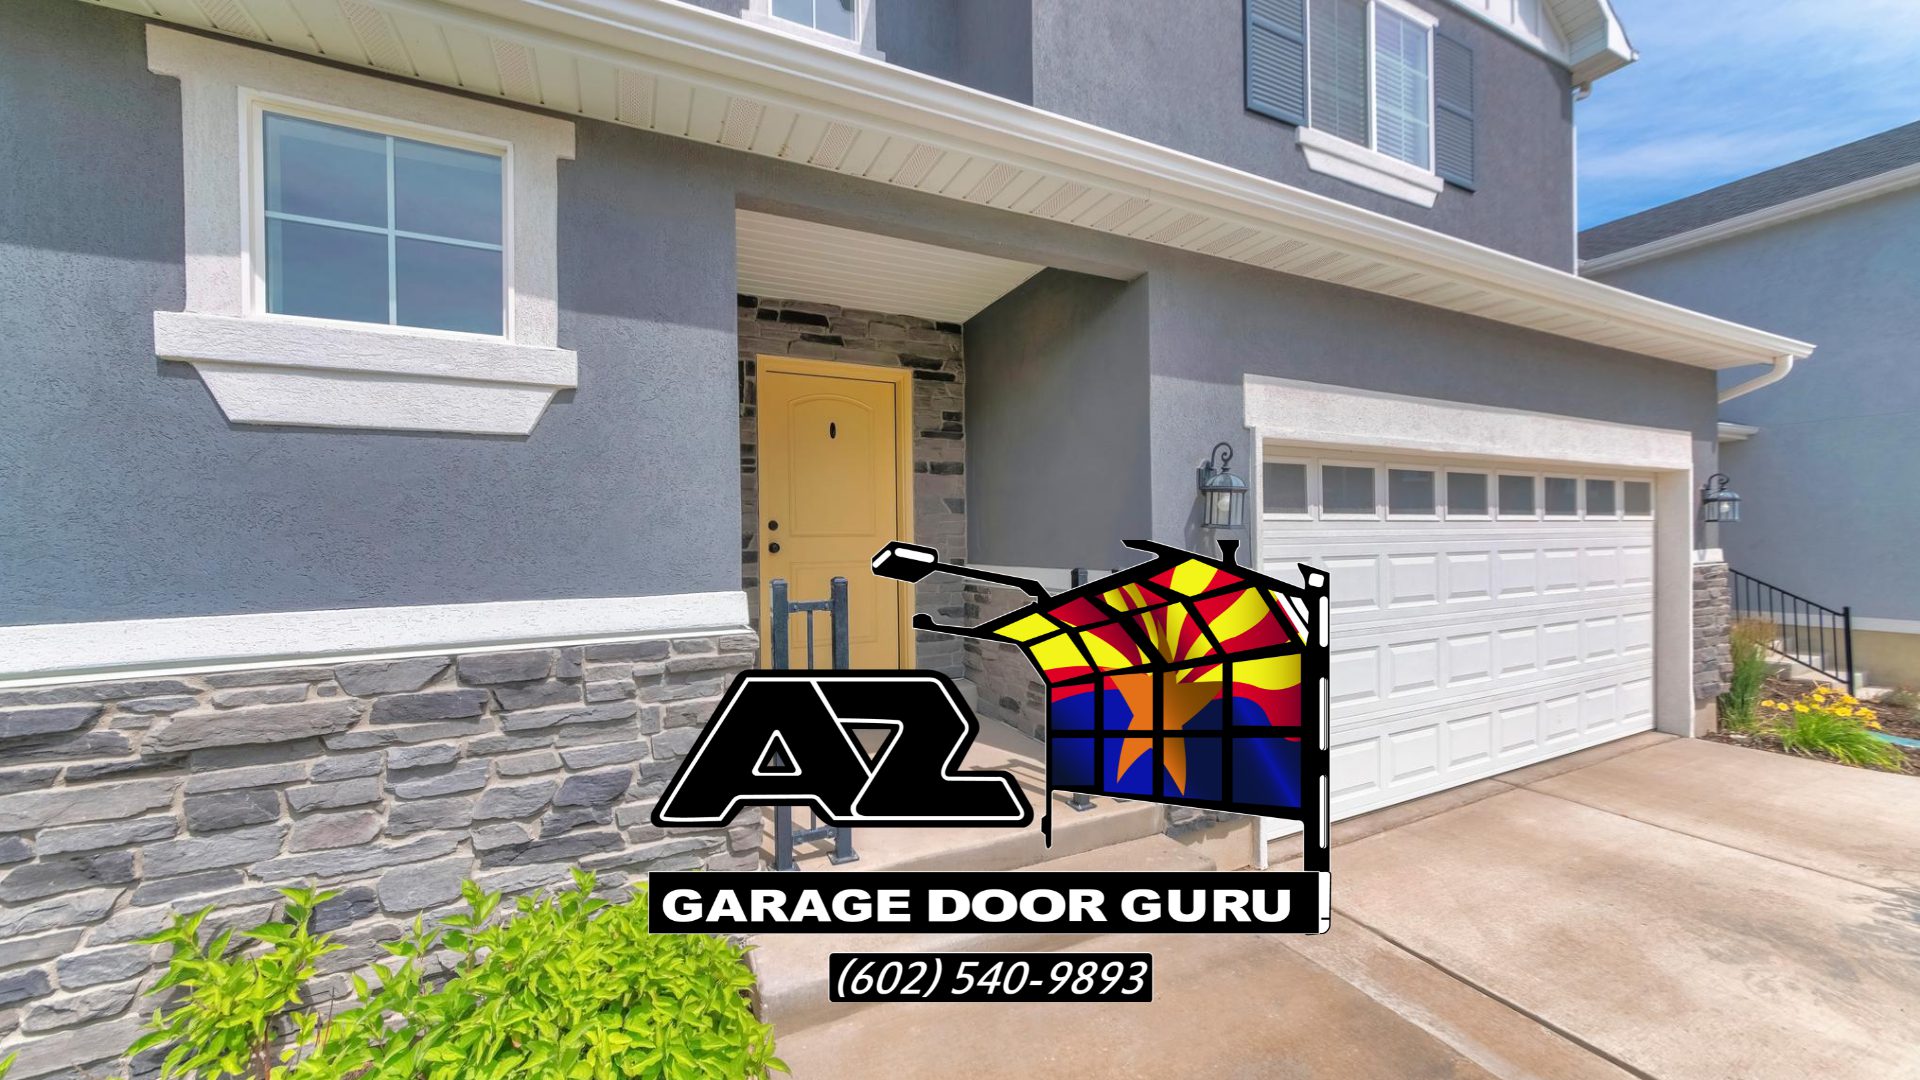 Getting the Best Garage Door Sizes For Your Home